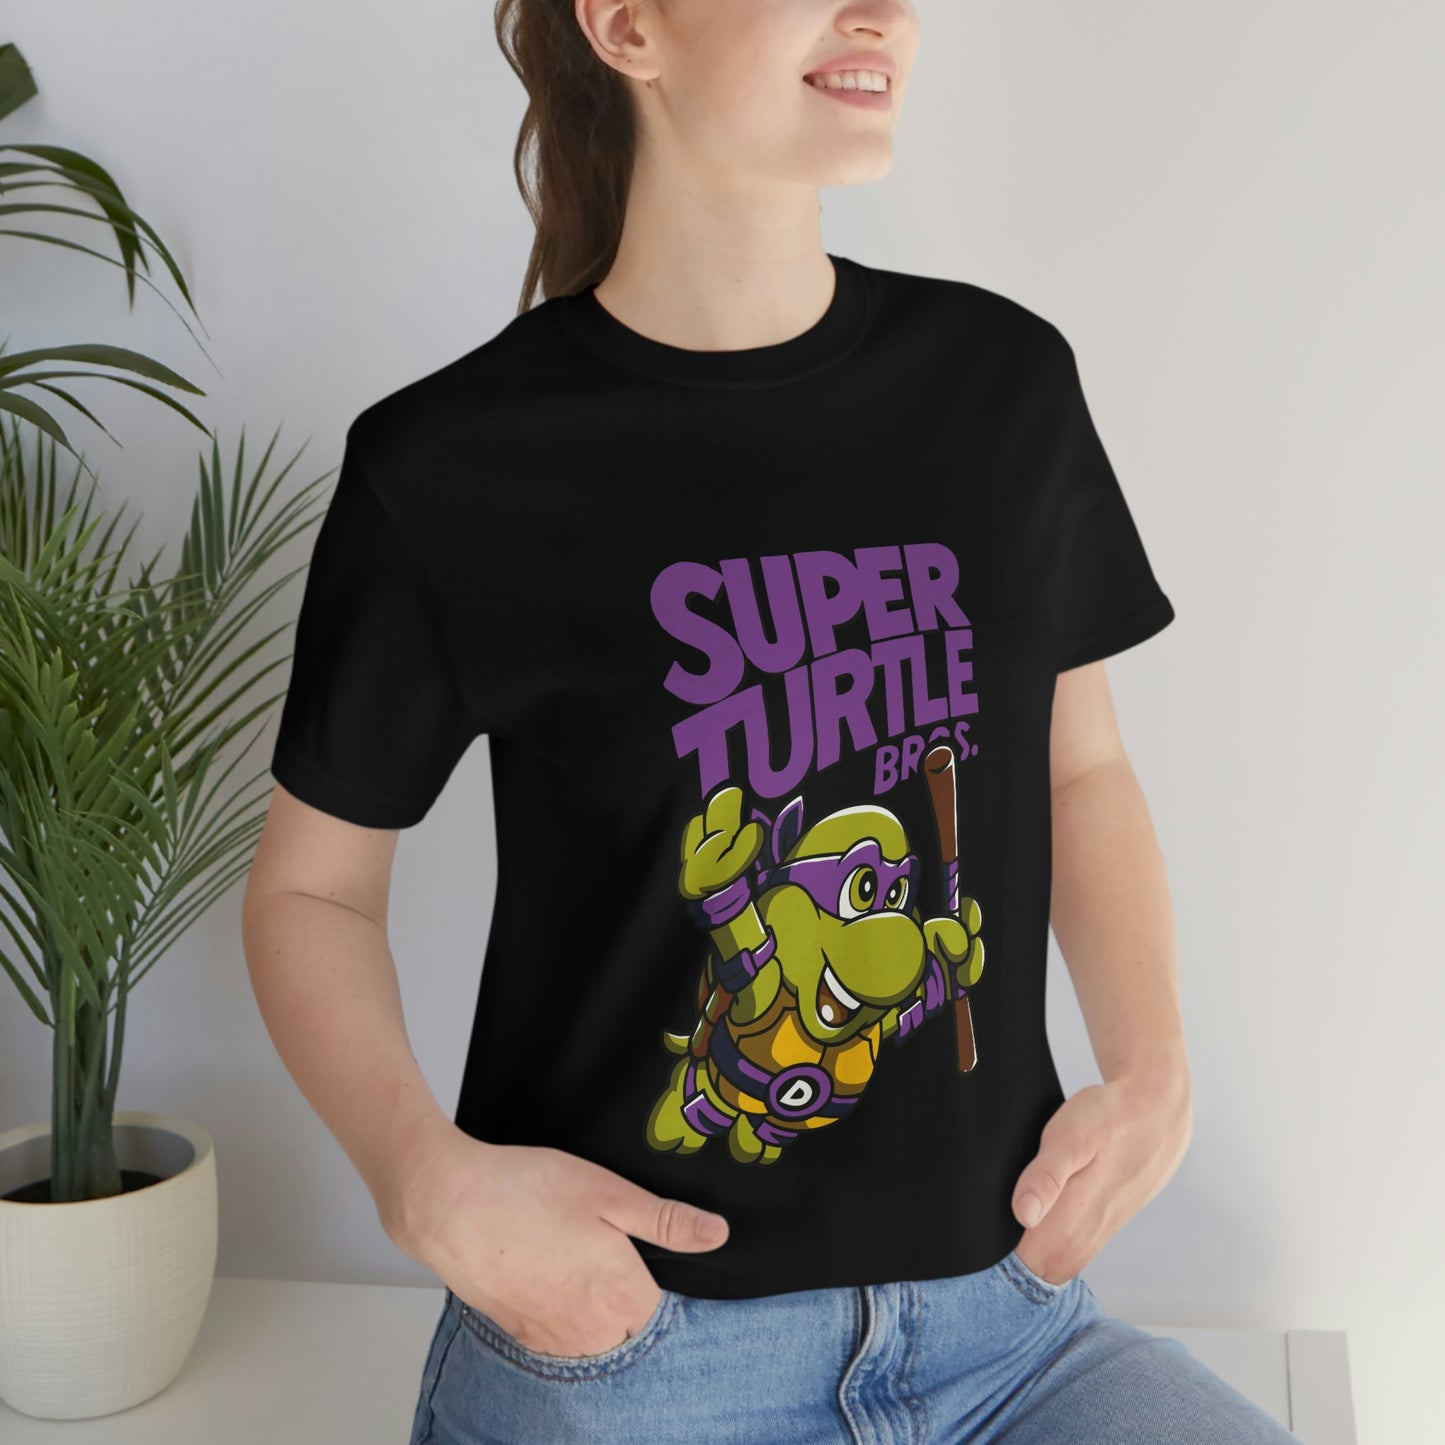 Super Turtle Ninja Unisex Jersey Short Sleeve Tee